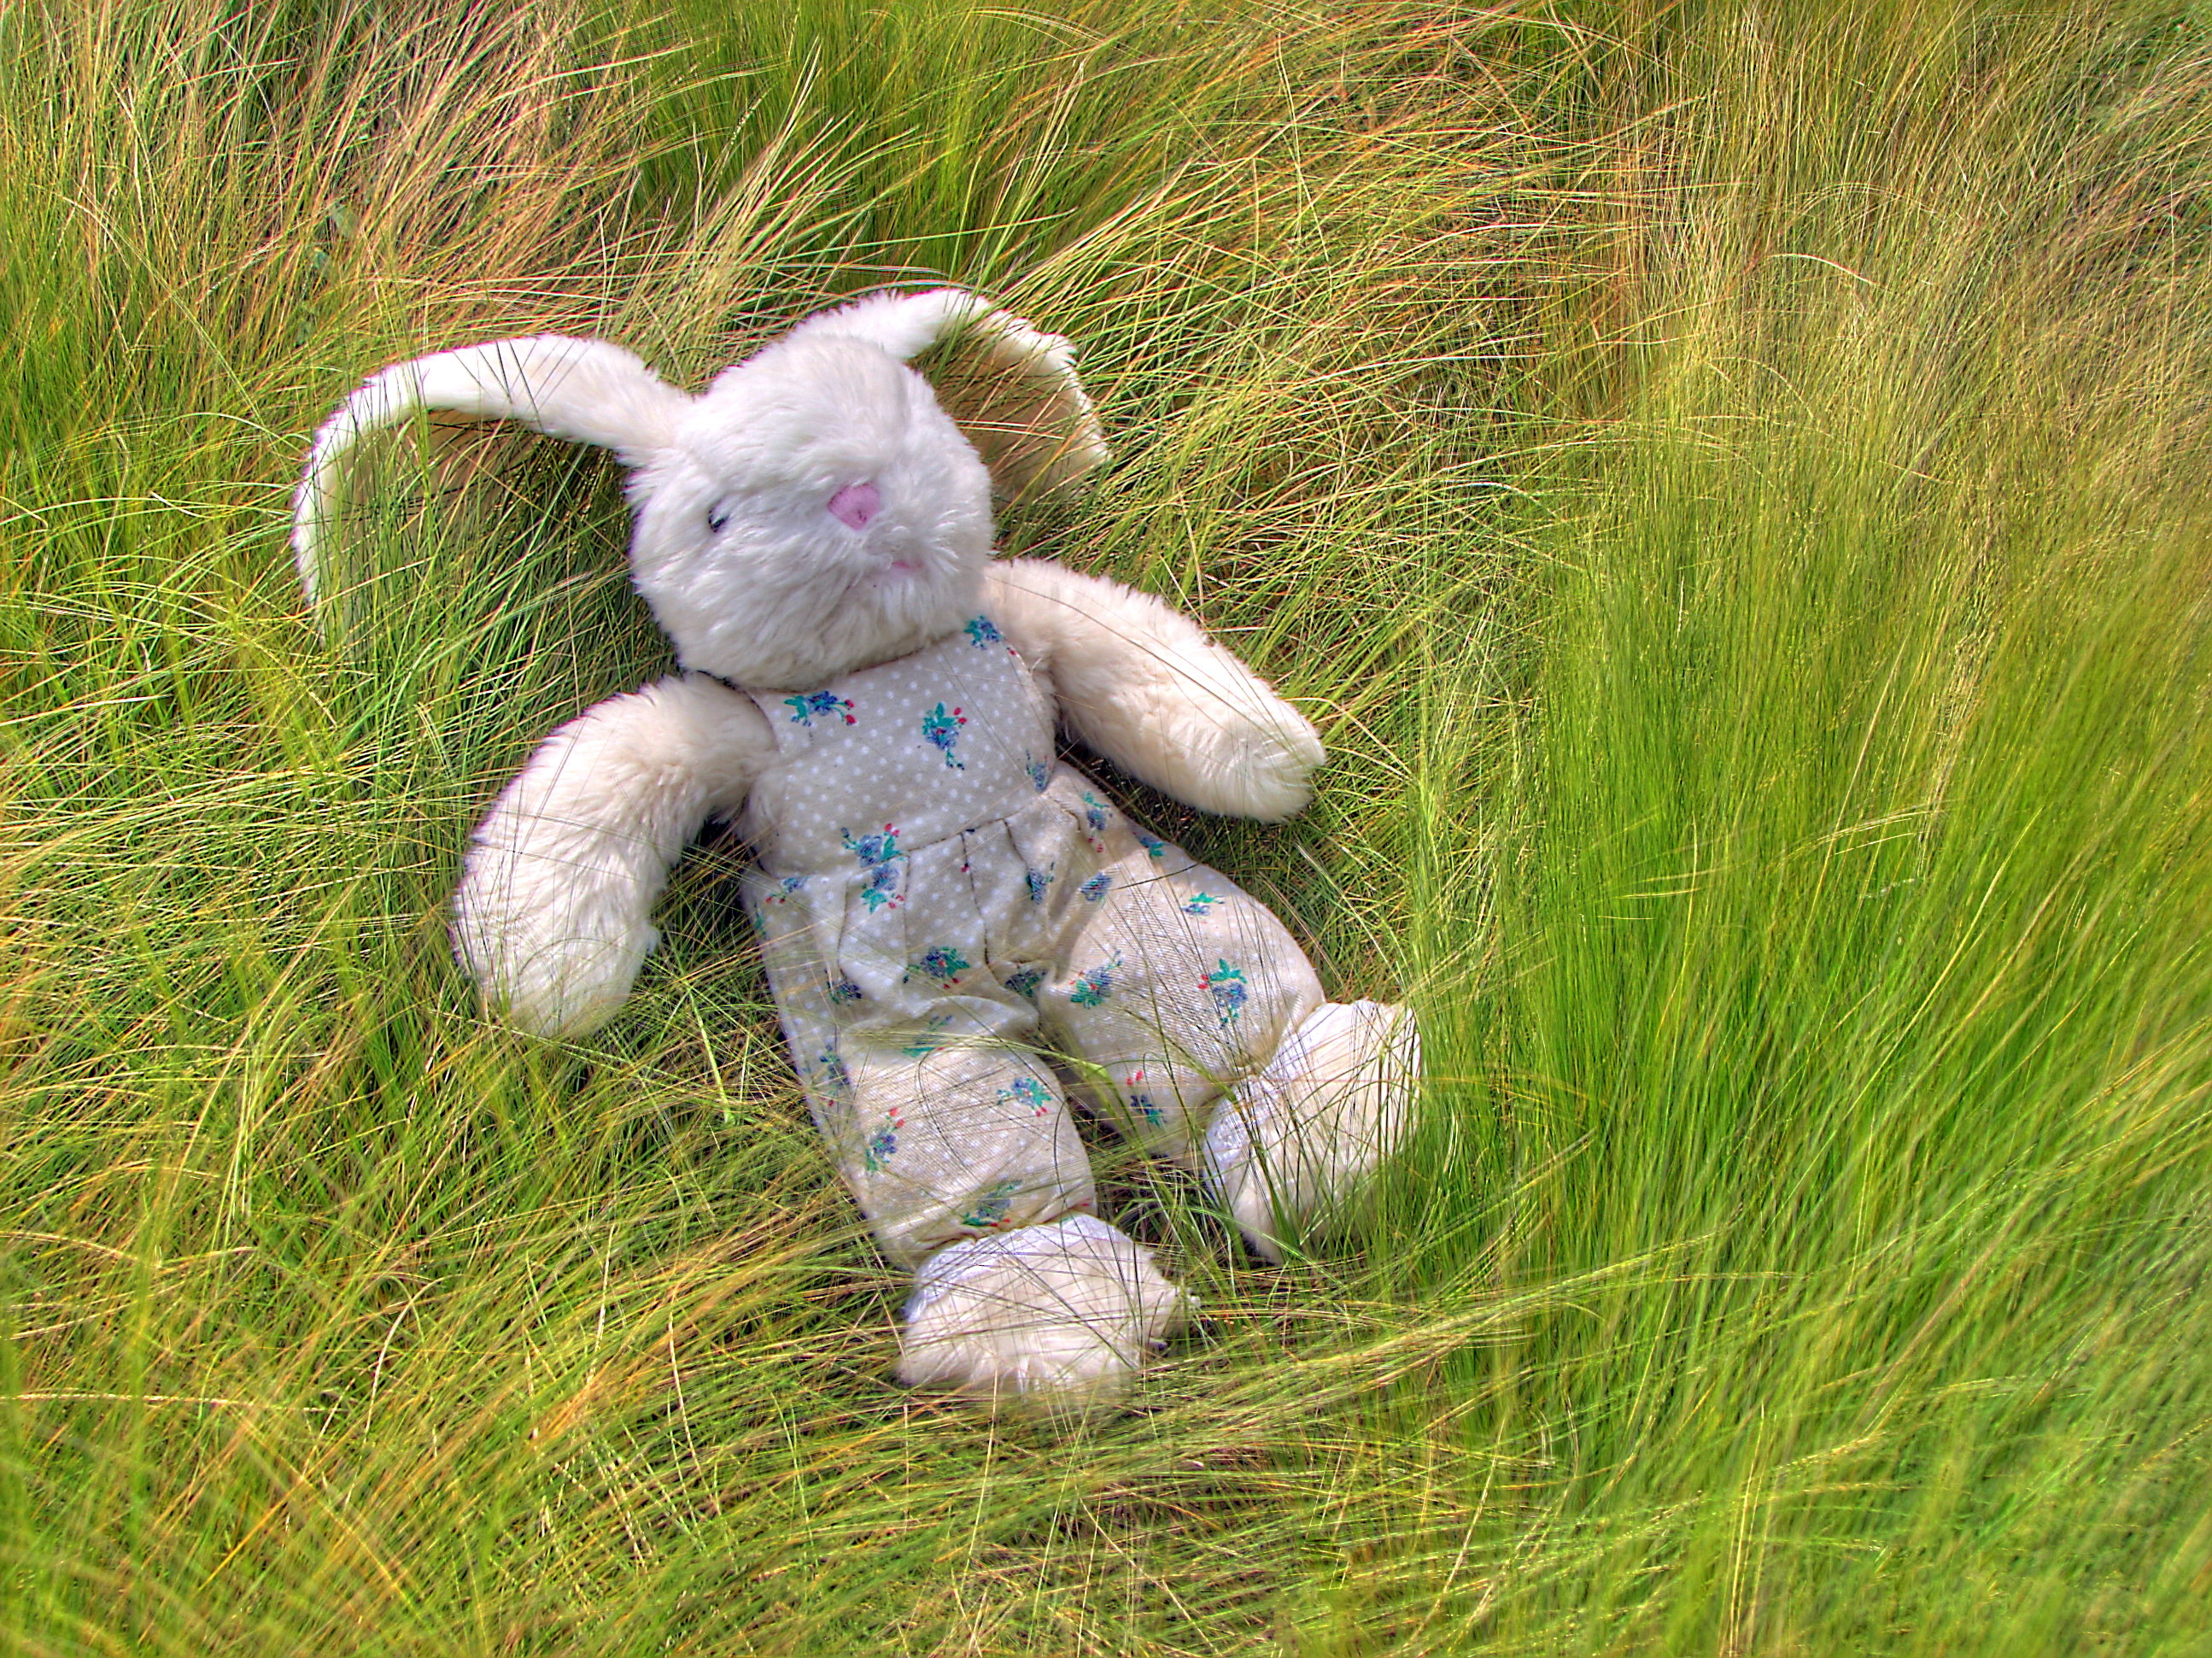 "04900 Toy Rabbit" by © Nevit Dilmen. Licensed under CC BY-SA 3.0 via Wikimedia Commons (https://commons.wikimedia.org/wiki/File:04900_Toy_Rabbit.jpg#/media/File:04900_Toy_Rabbit.jpg)